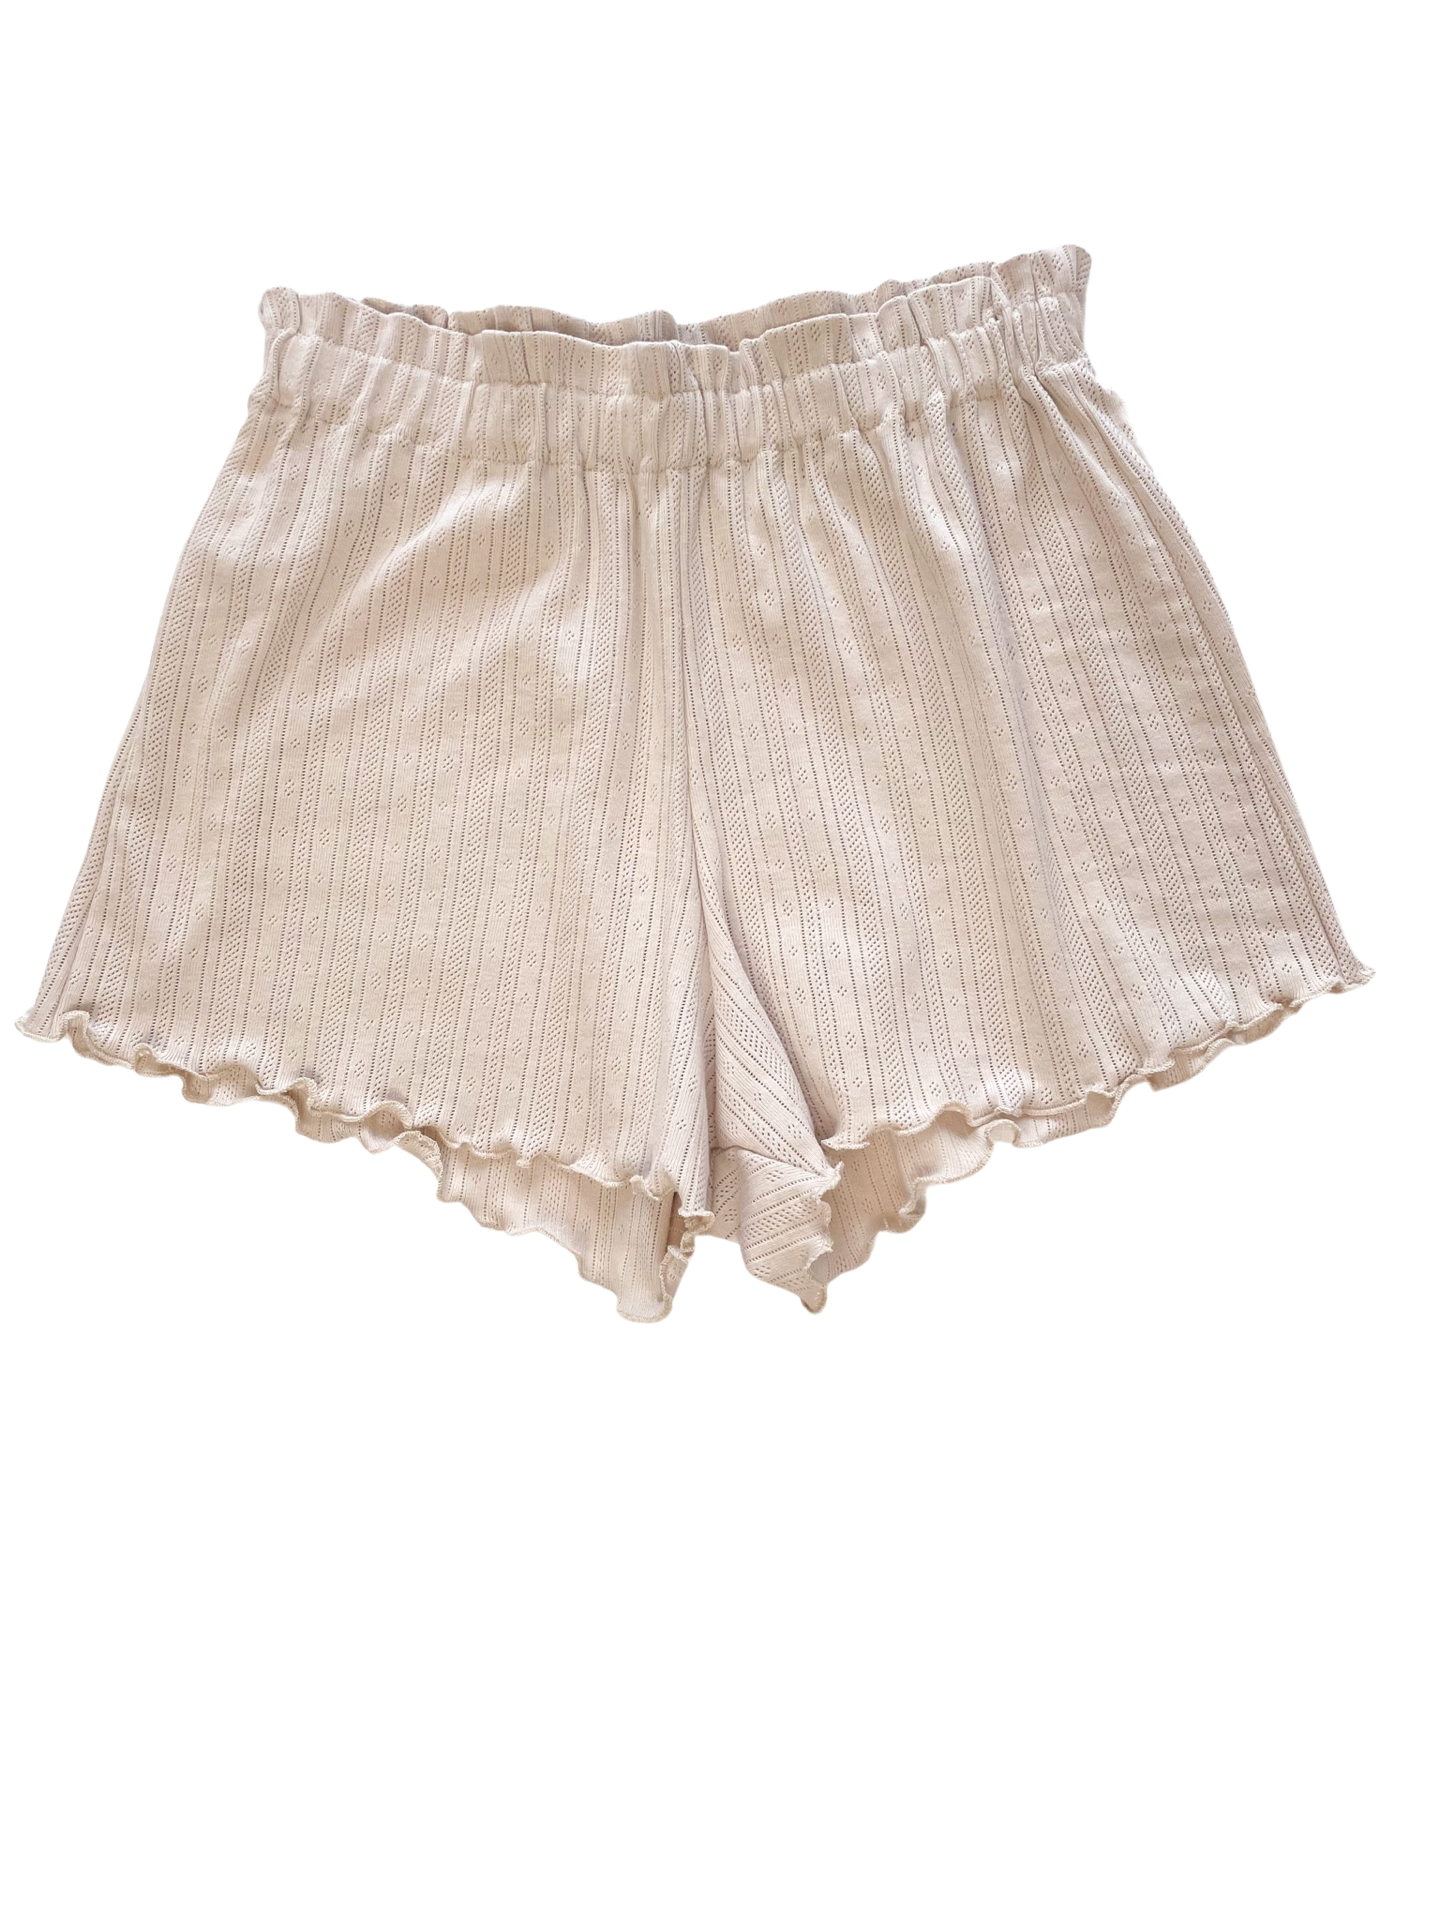 Pointoille ruffle shorts / beige